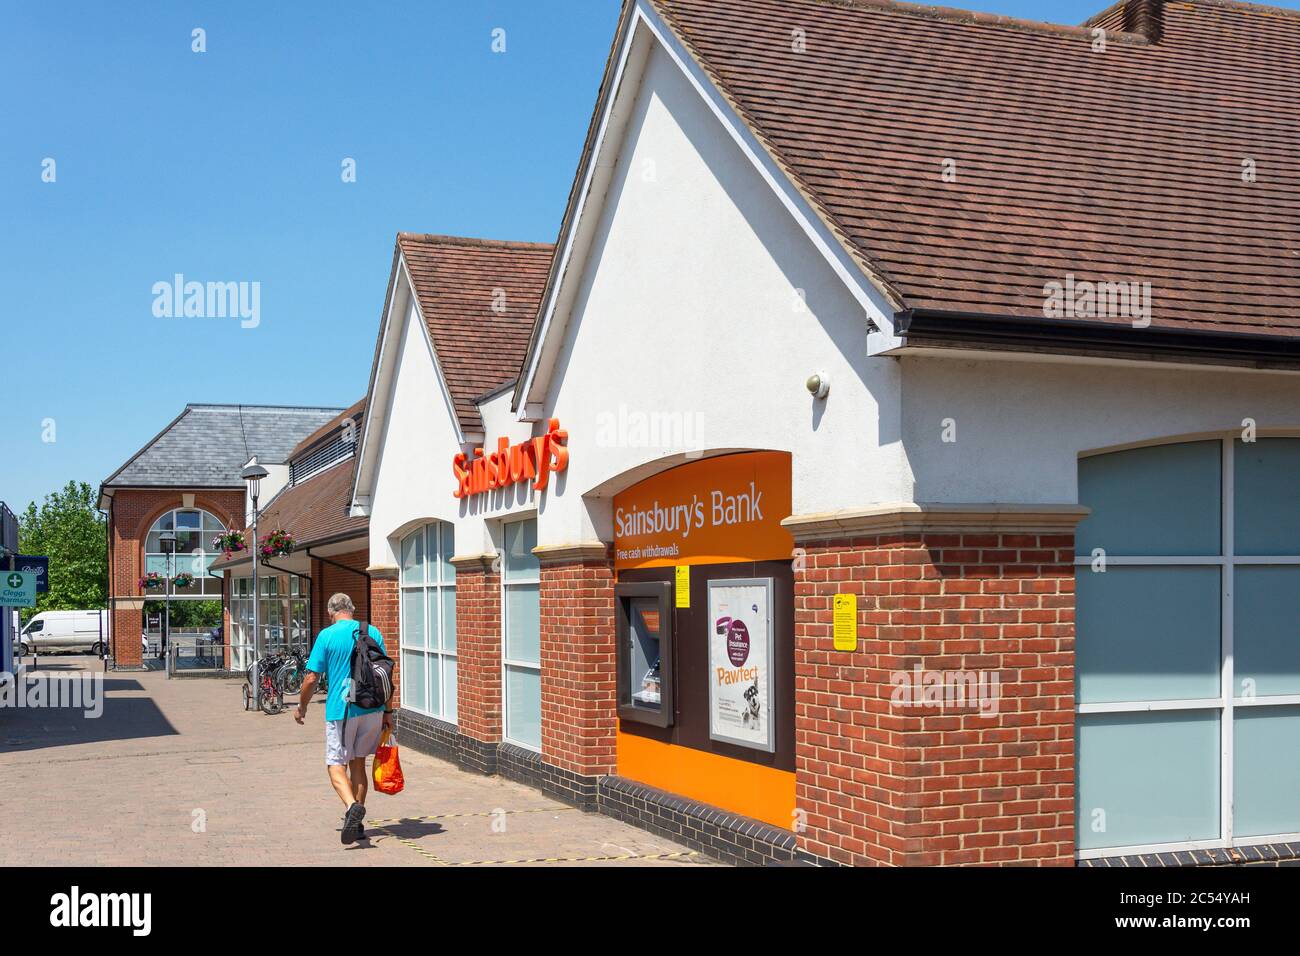 Supermarché Sainsbury, Kings Park, Wantage, Oxfordshire, Angleterre, Royaume-Uni Banque D'Images